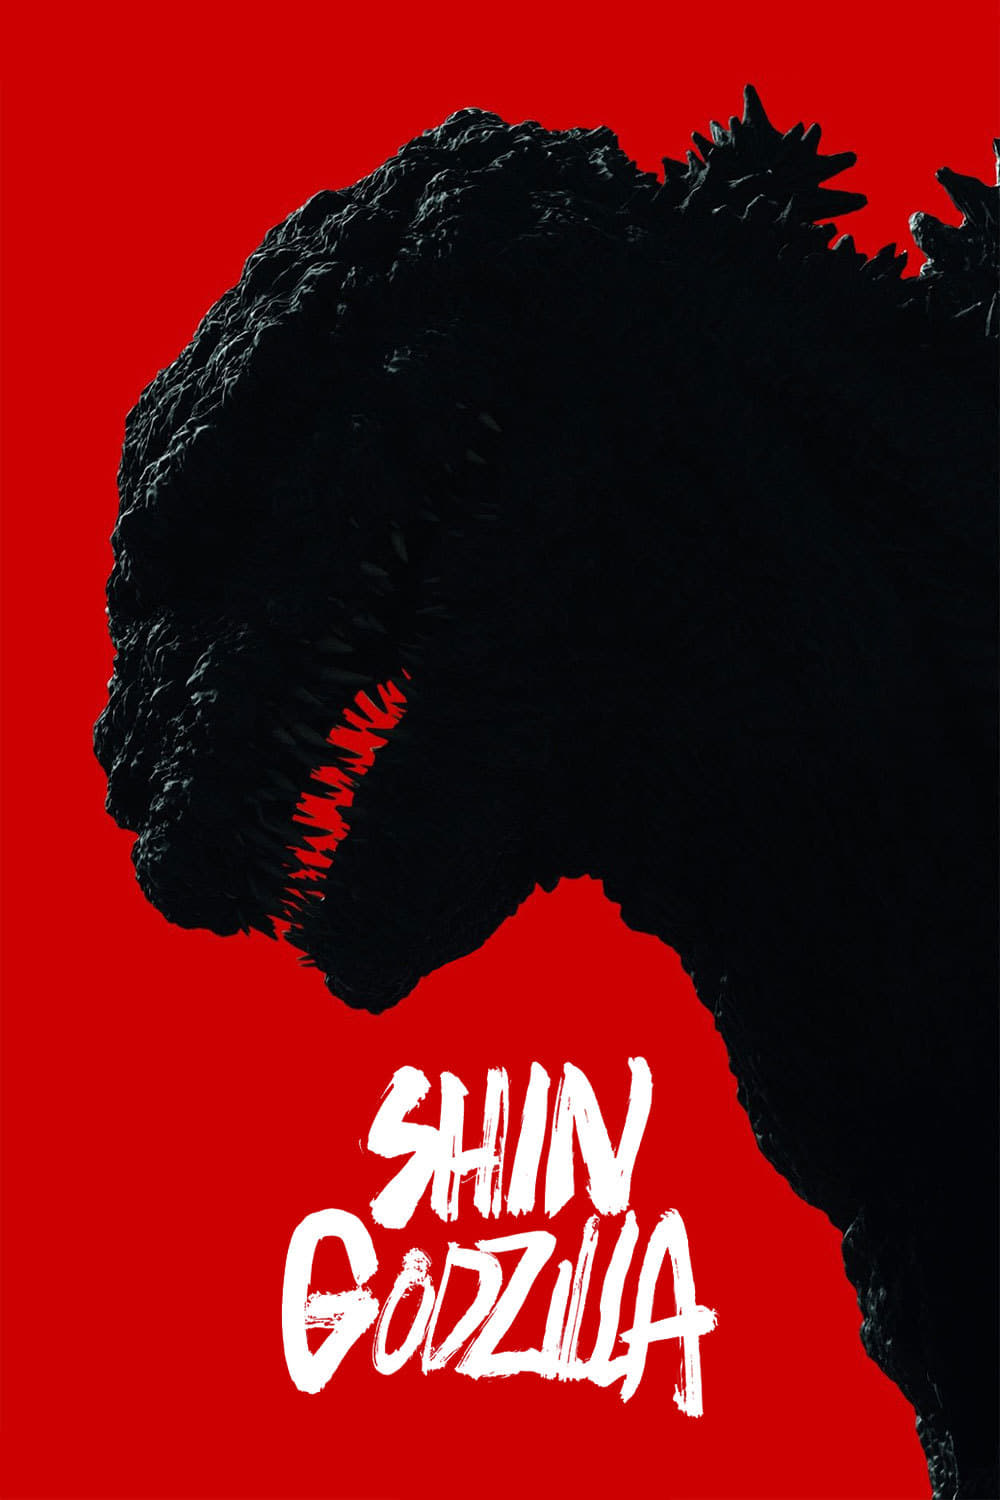 Godzilla Ressurge (2016)